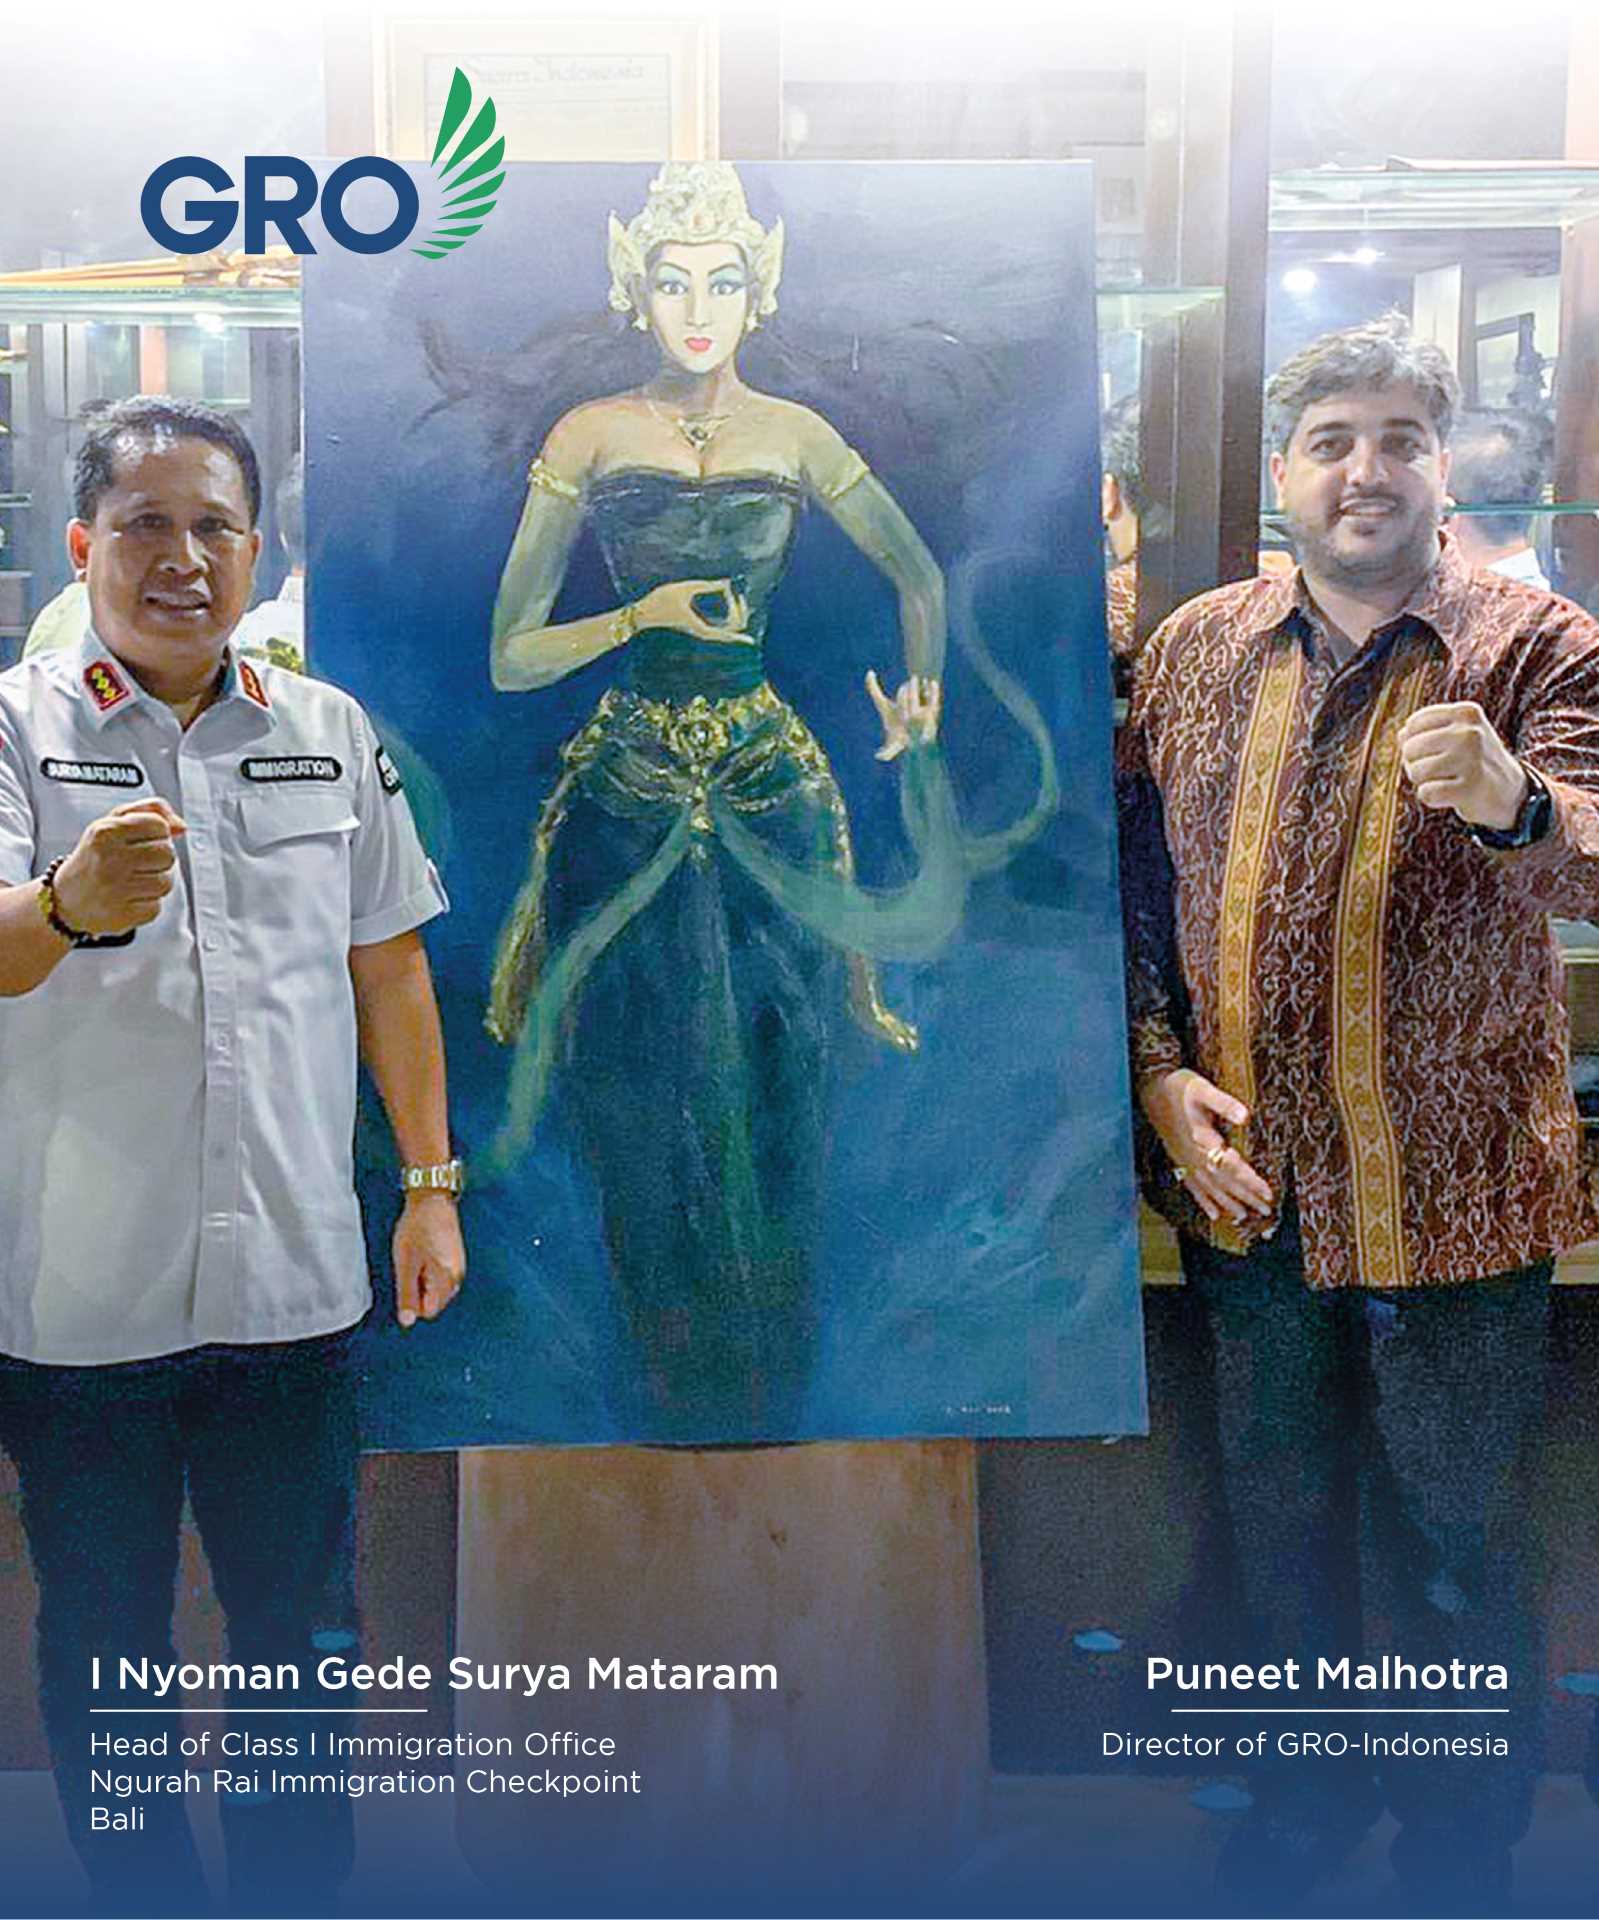 I Nyoman Gede Surya Mataram is the Head of Class I Immigration Office Ngurah Rai Immigration Checkpoint Bali (Left)